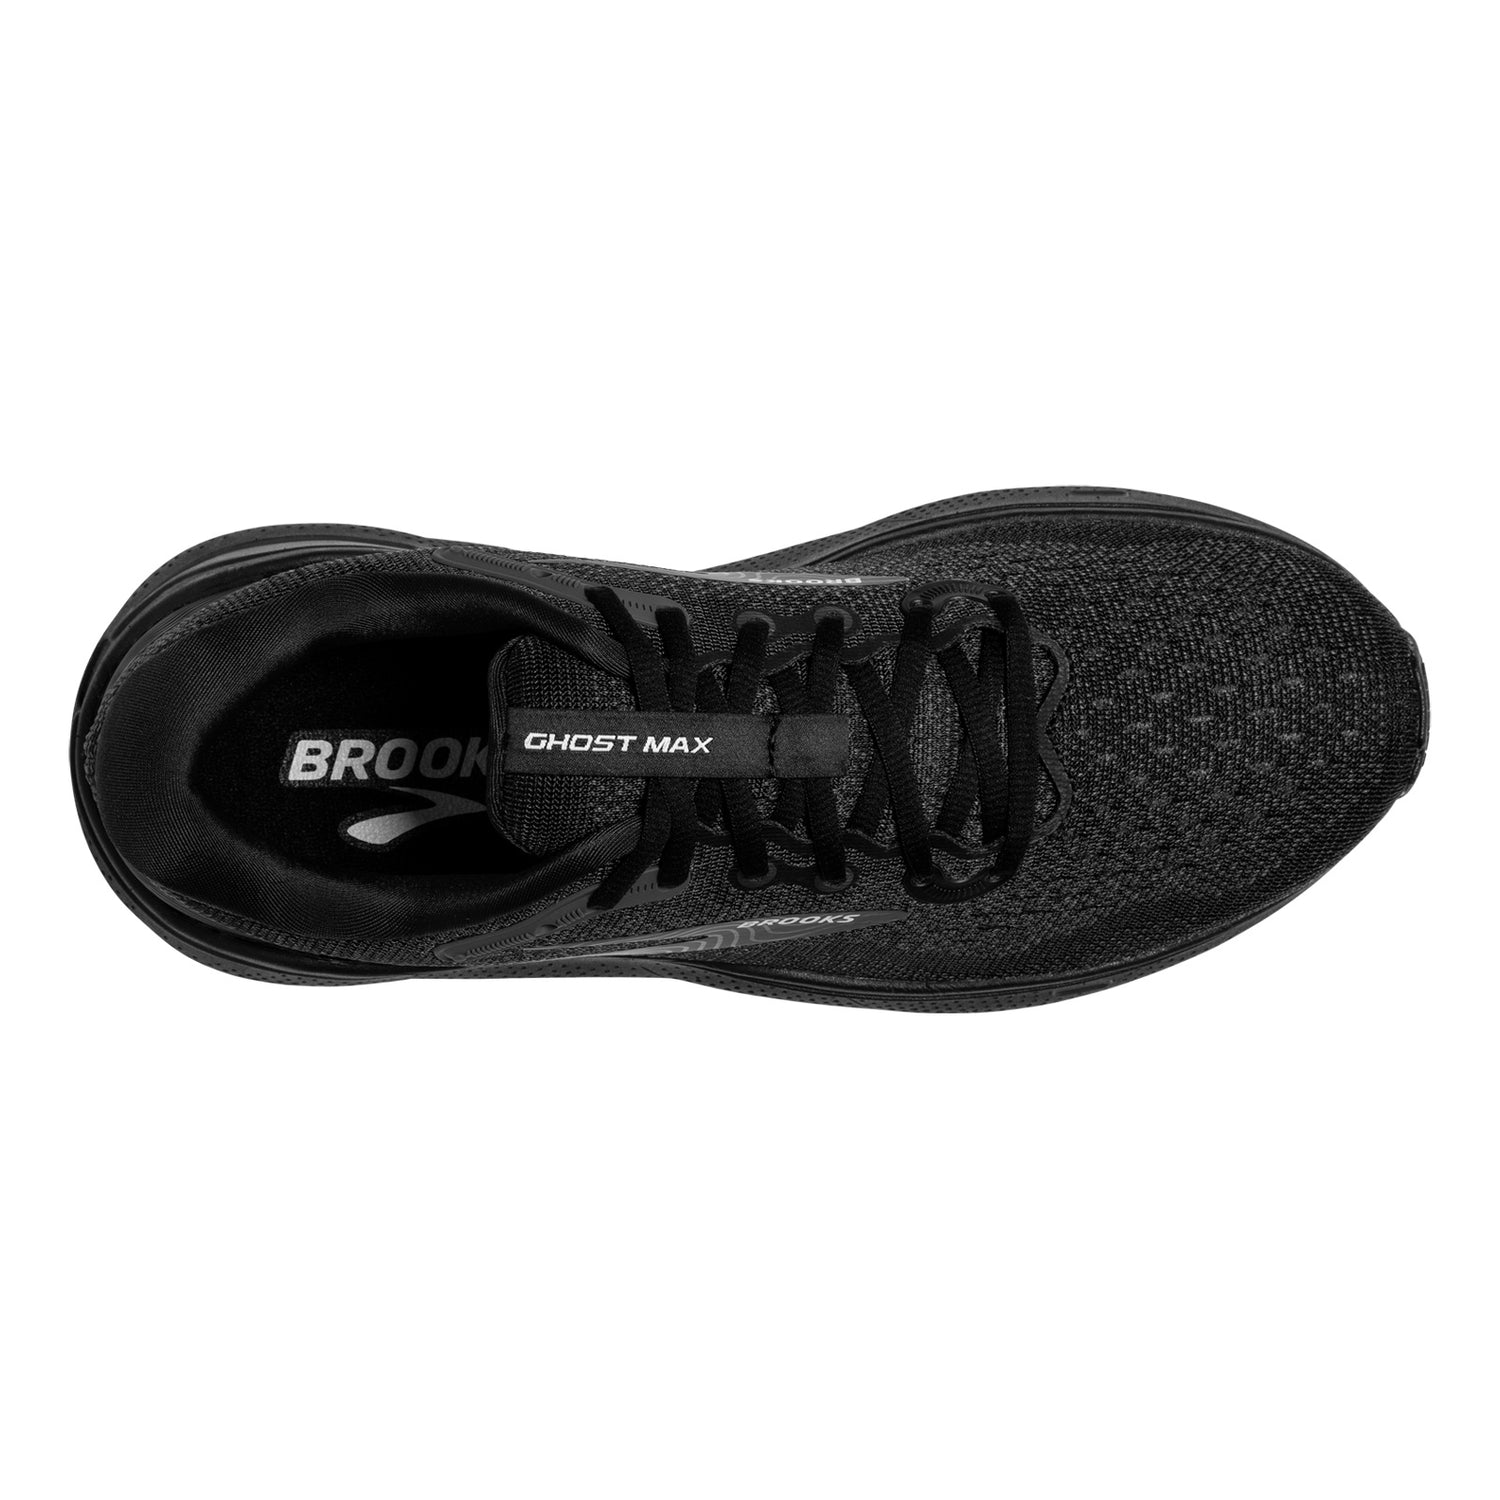 Peltz Shoes  Women's Brooks Ghost Max Running Shoe Black/Black/Ebony 120395 1B 020